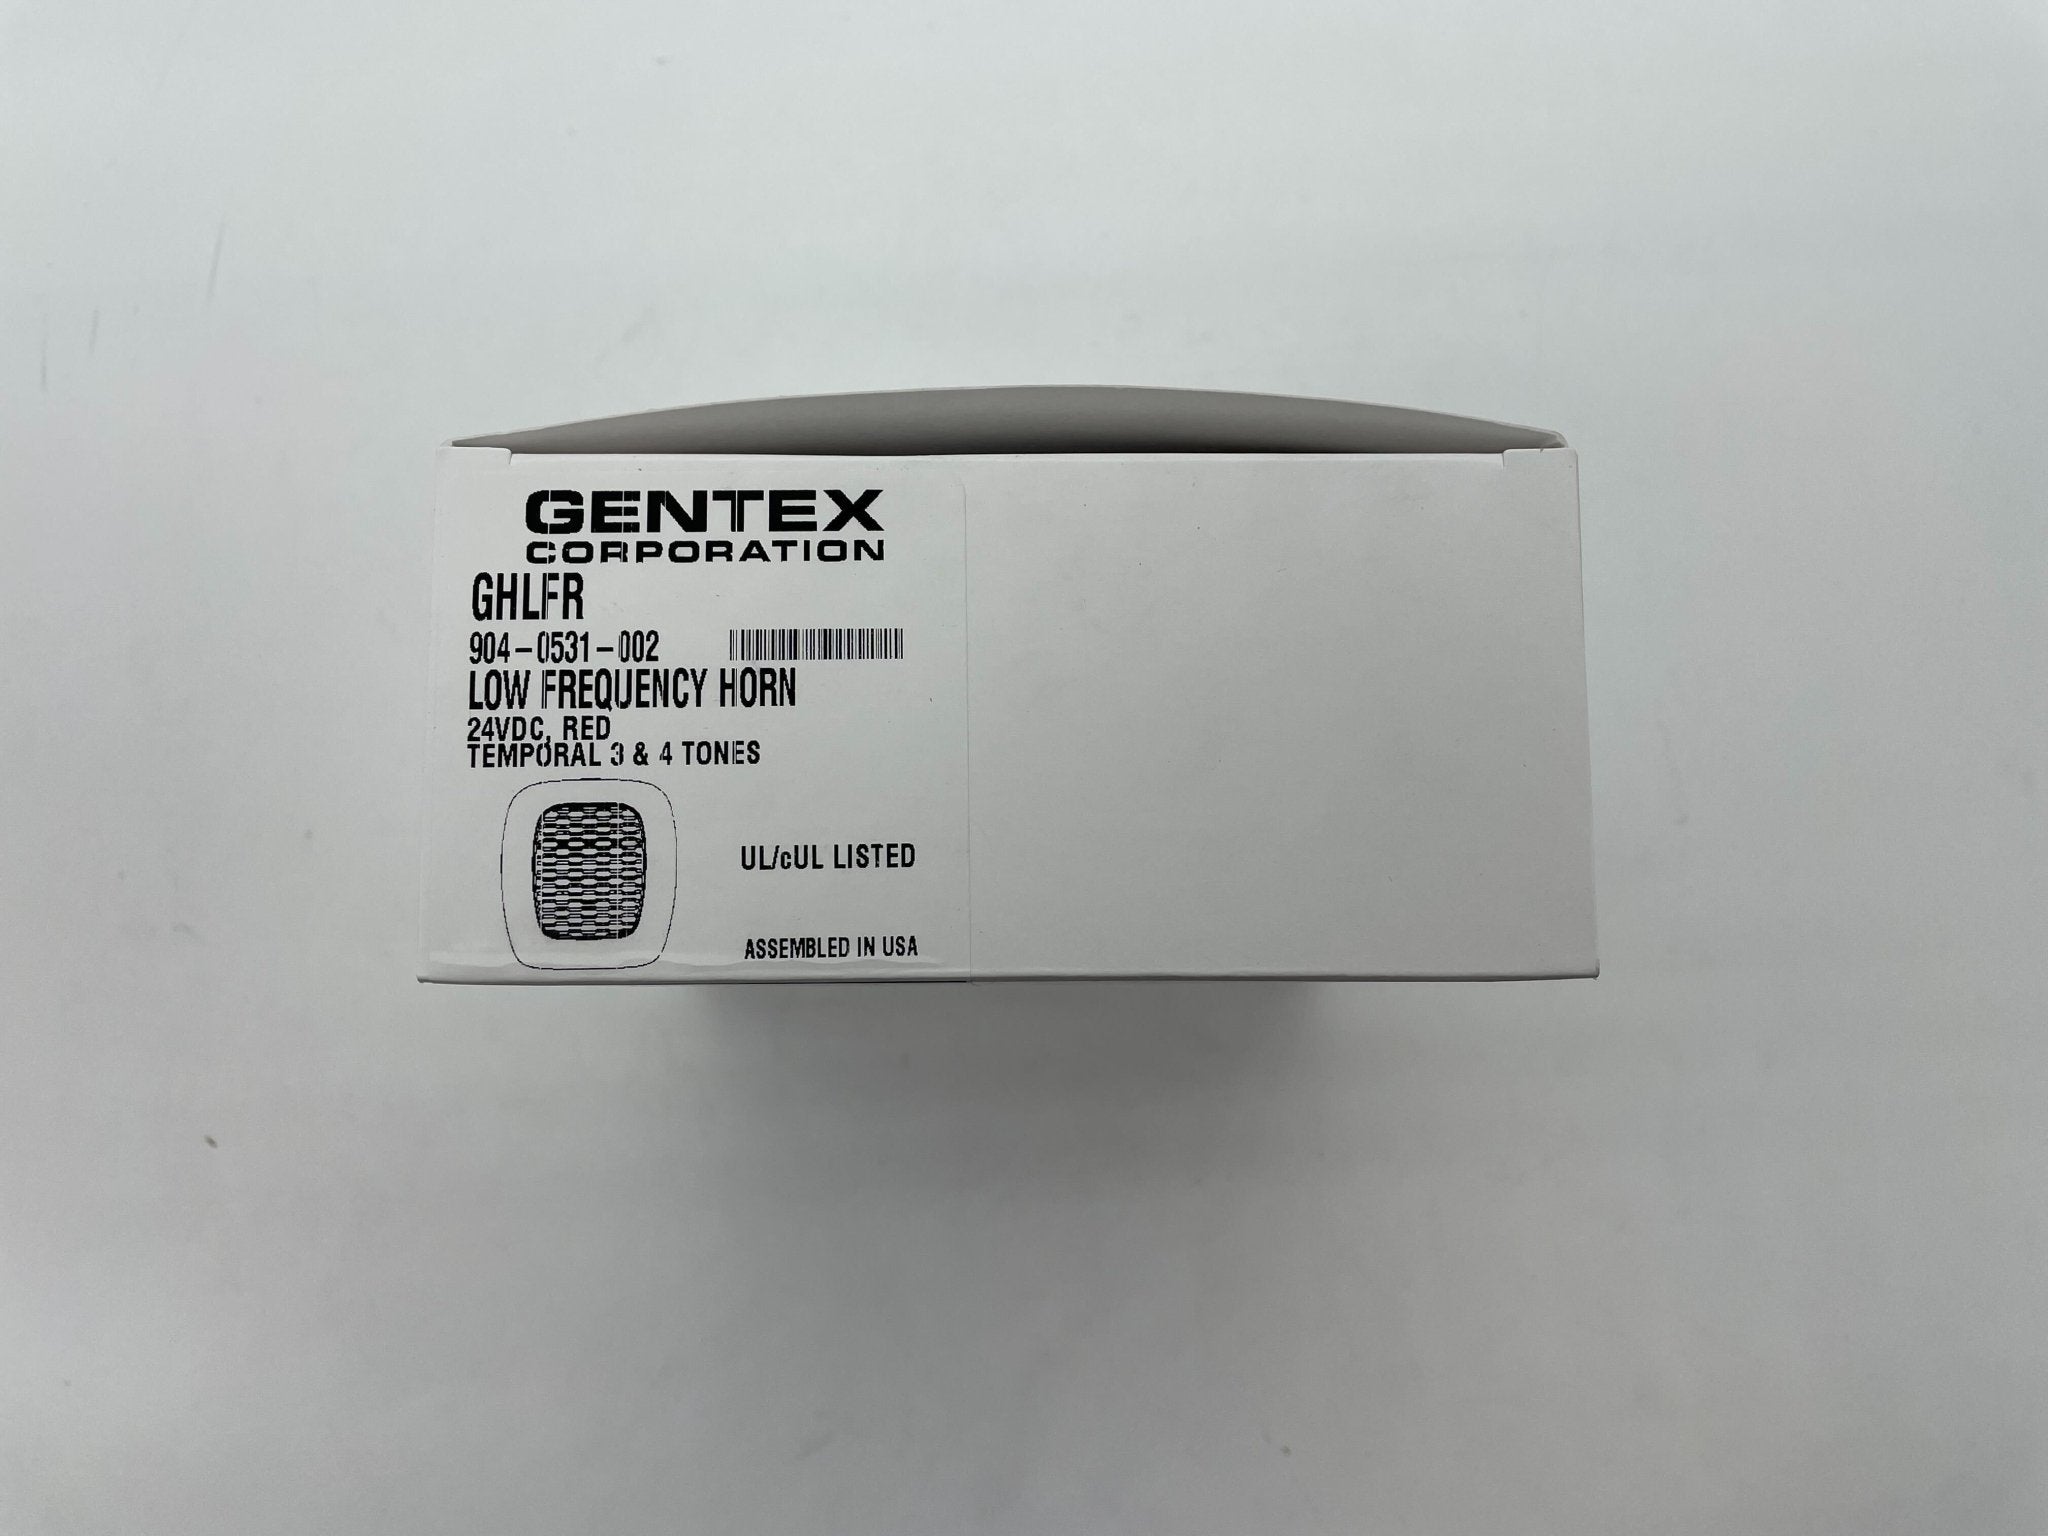 Gentex GHLFR - The Fire Alarm Supplier